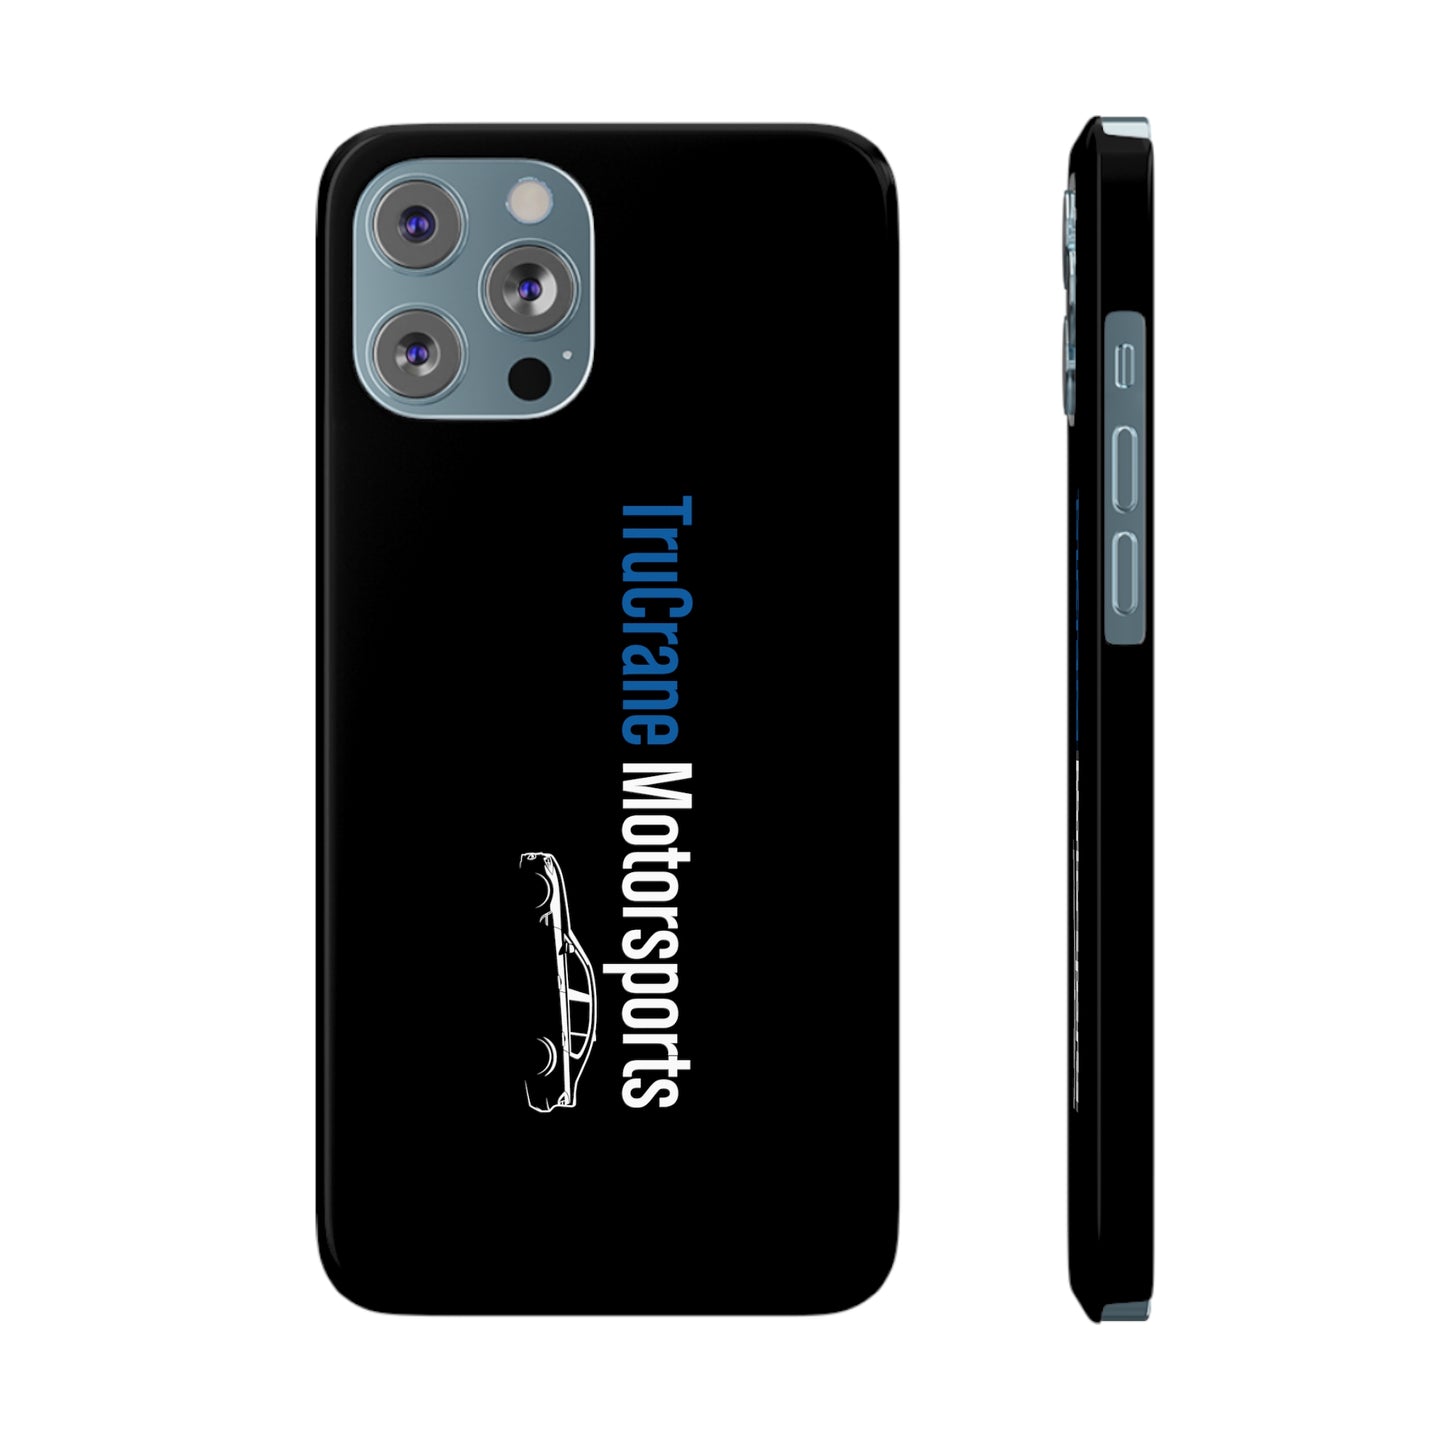 TruCrane Motorsports Slim iPhone Case -Black All Models